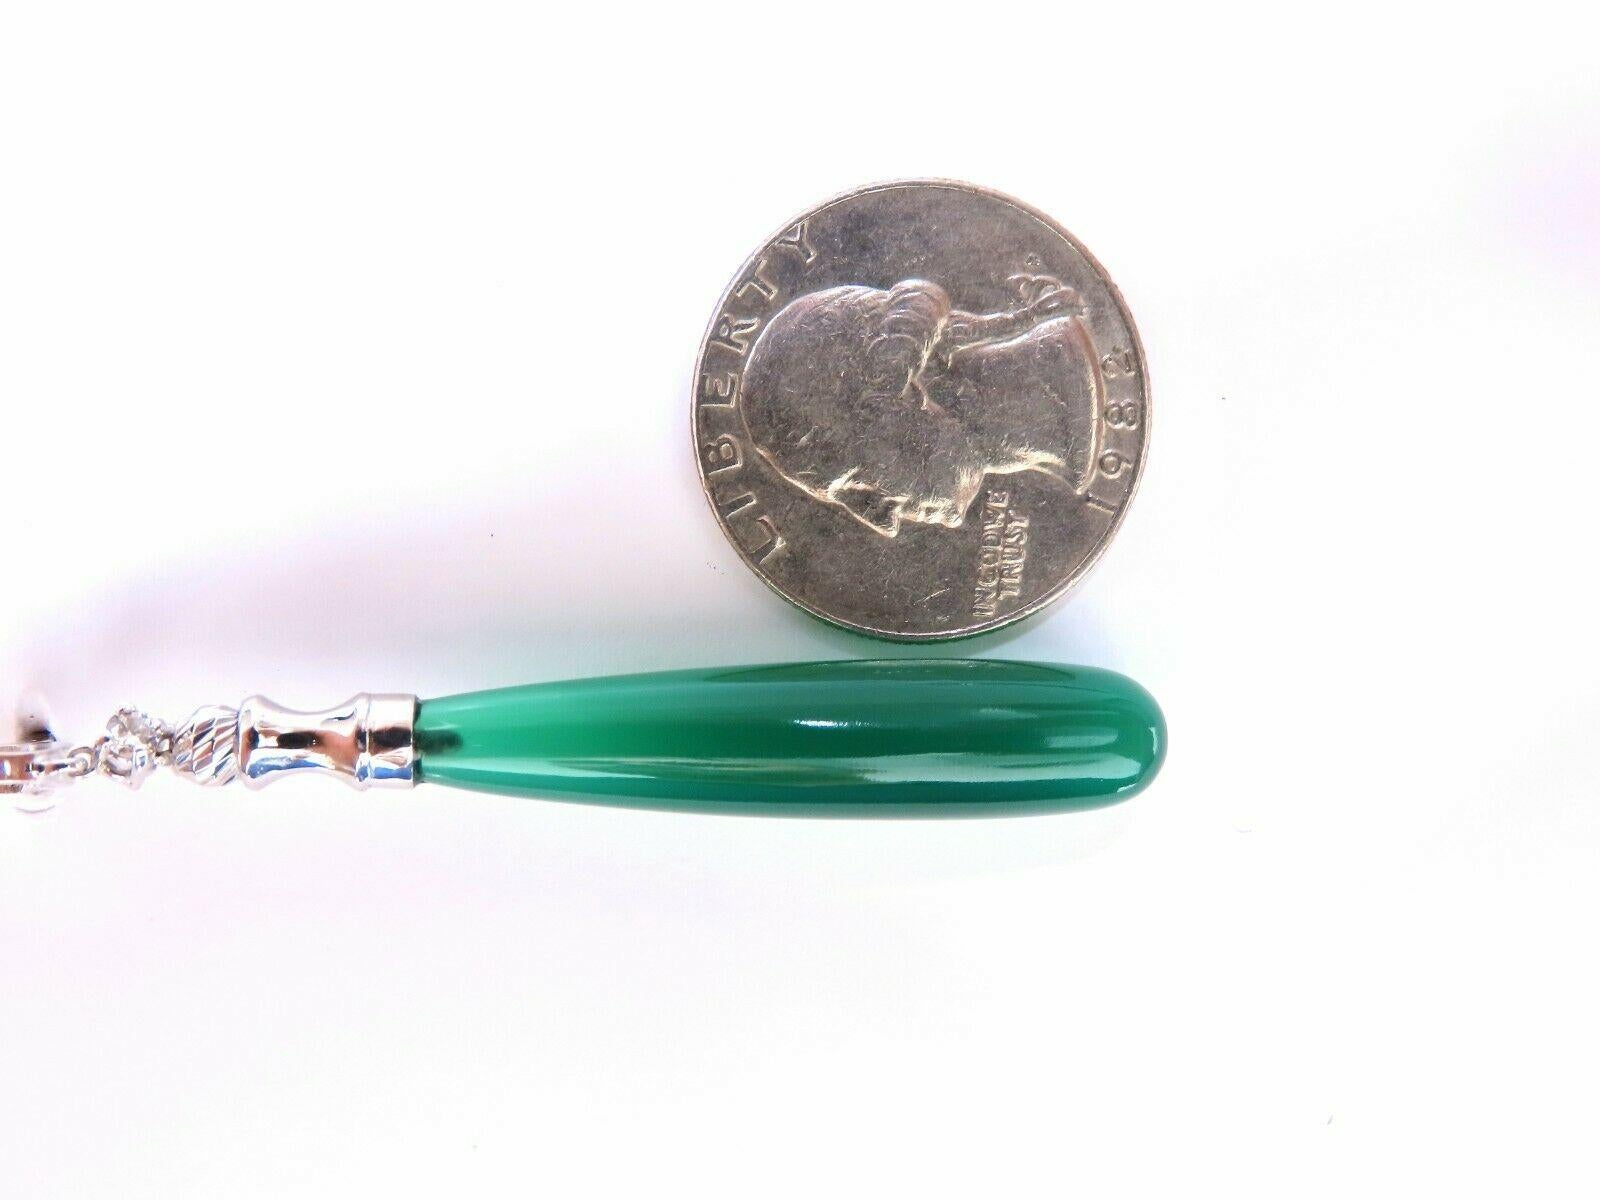 Extra long sleek Jade drop dangle earrings

Natural matching green jade.

37x8.2 mm

.30 carat round brilliant cut natural diamonds.

G color vs2 clarity

14 karat white gold 12.2 g

Earrings measure 2.6 inch long